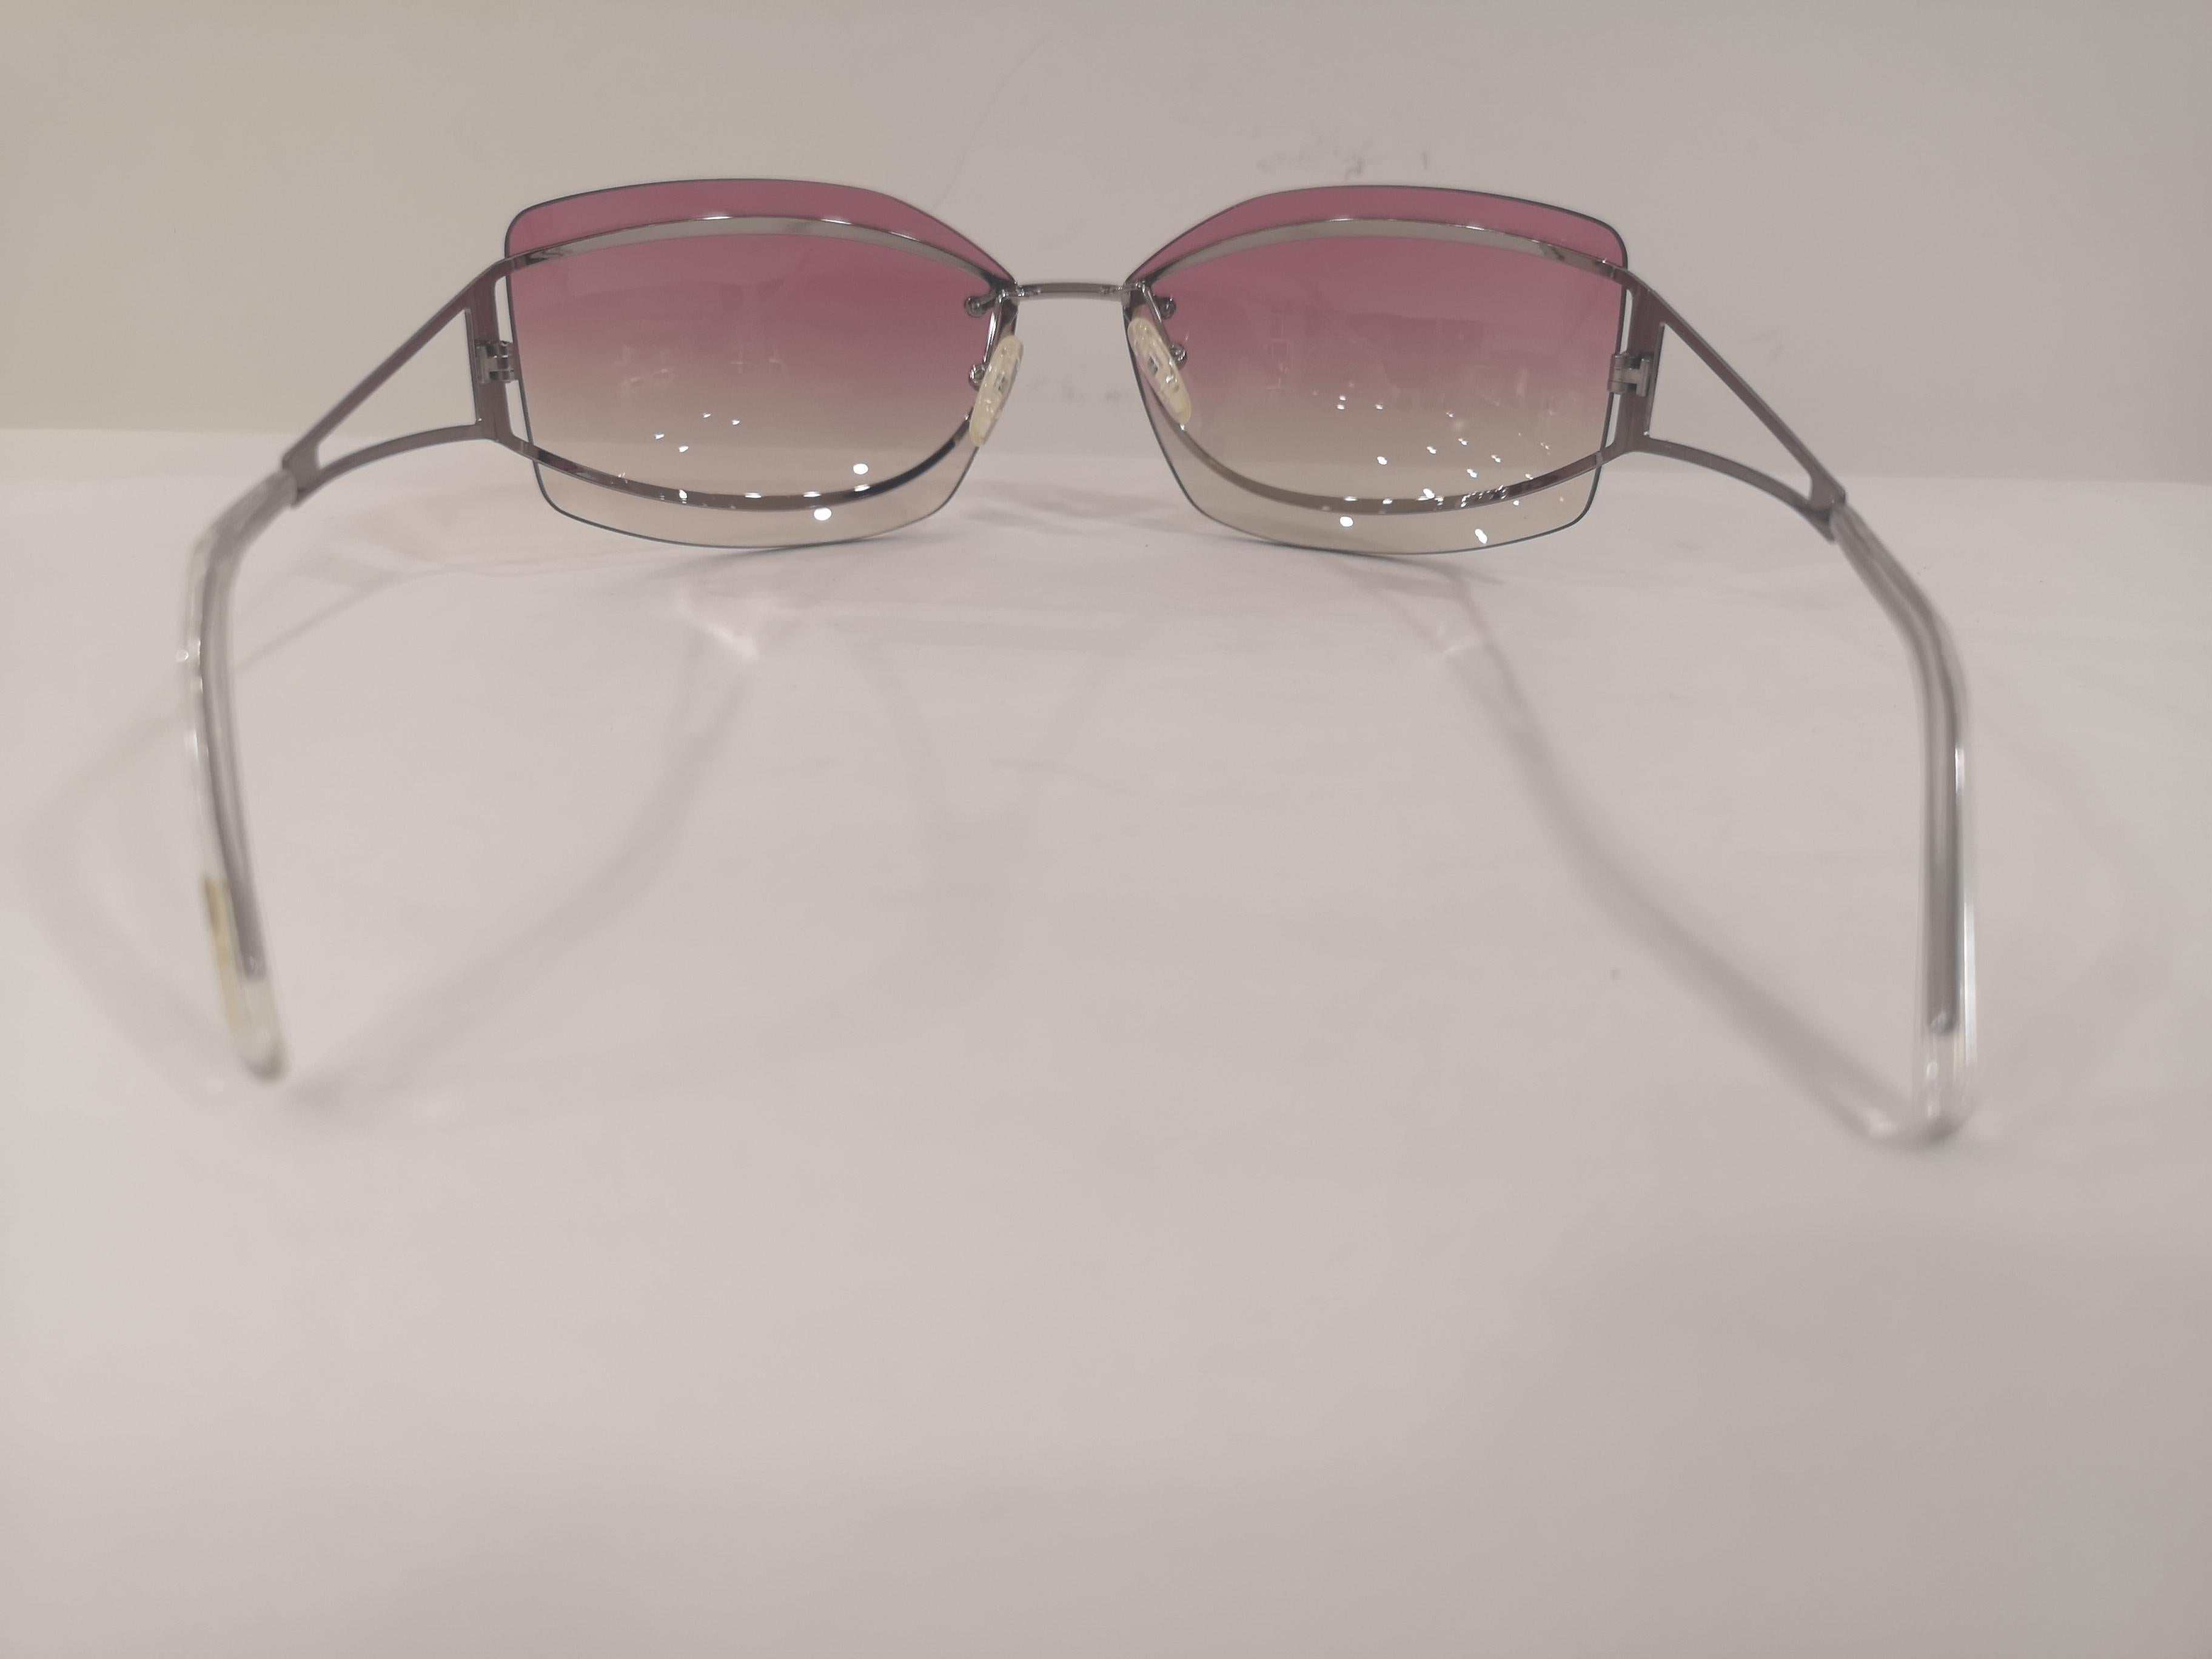 Salvatore Ferragamo pink sunglasses NWOT 2